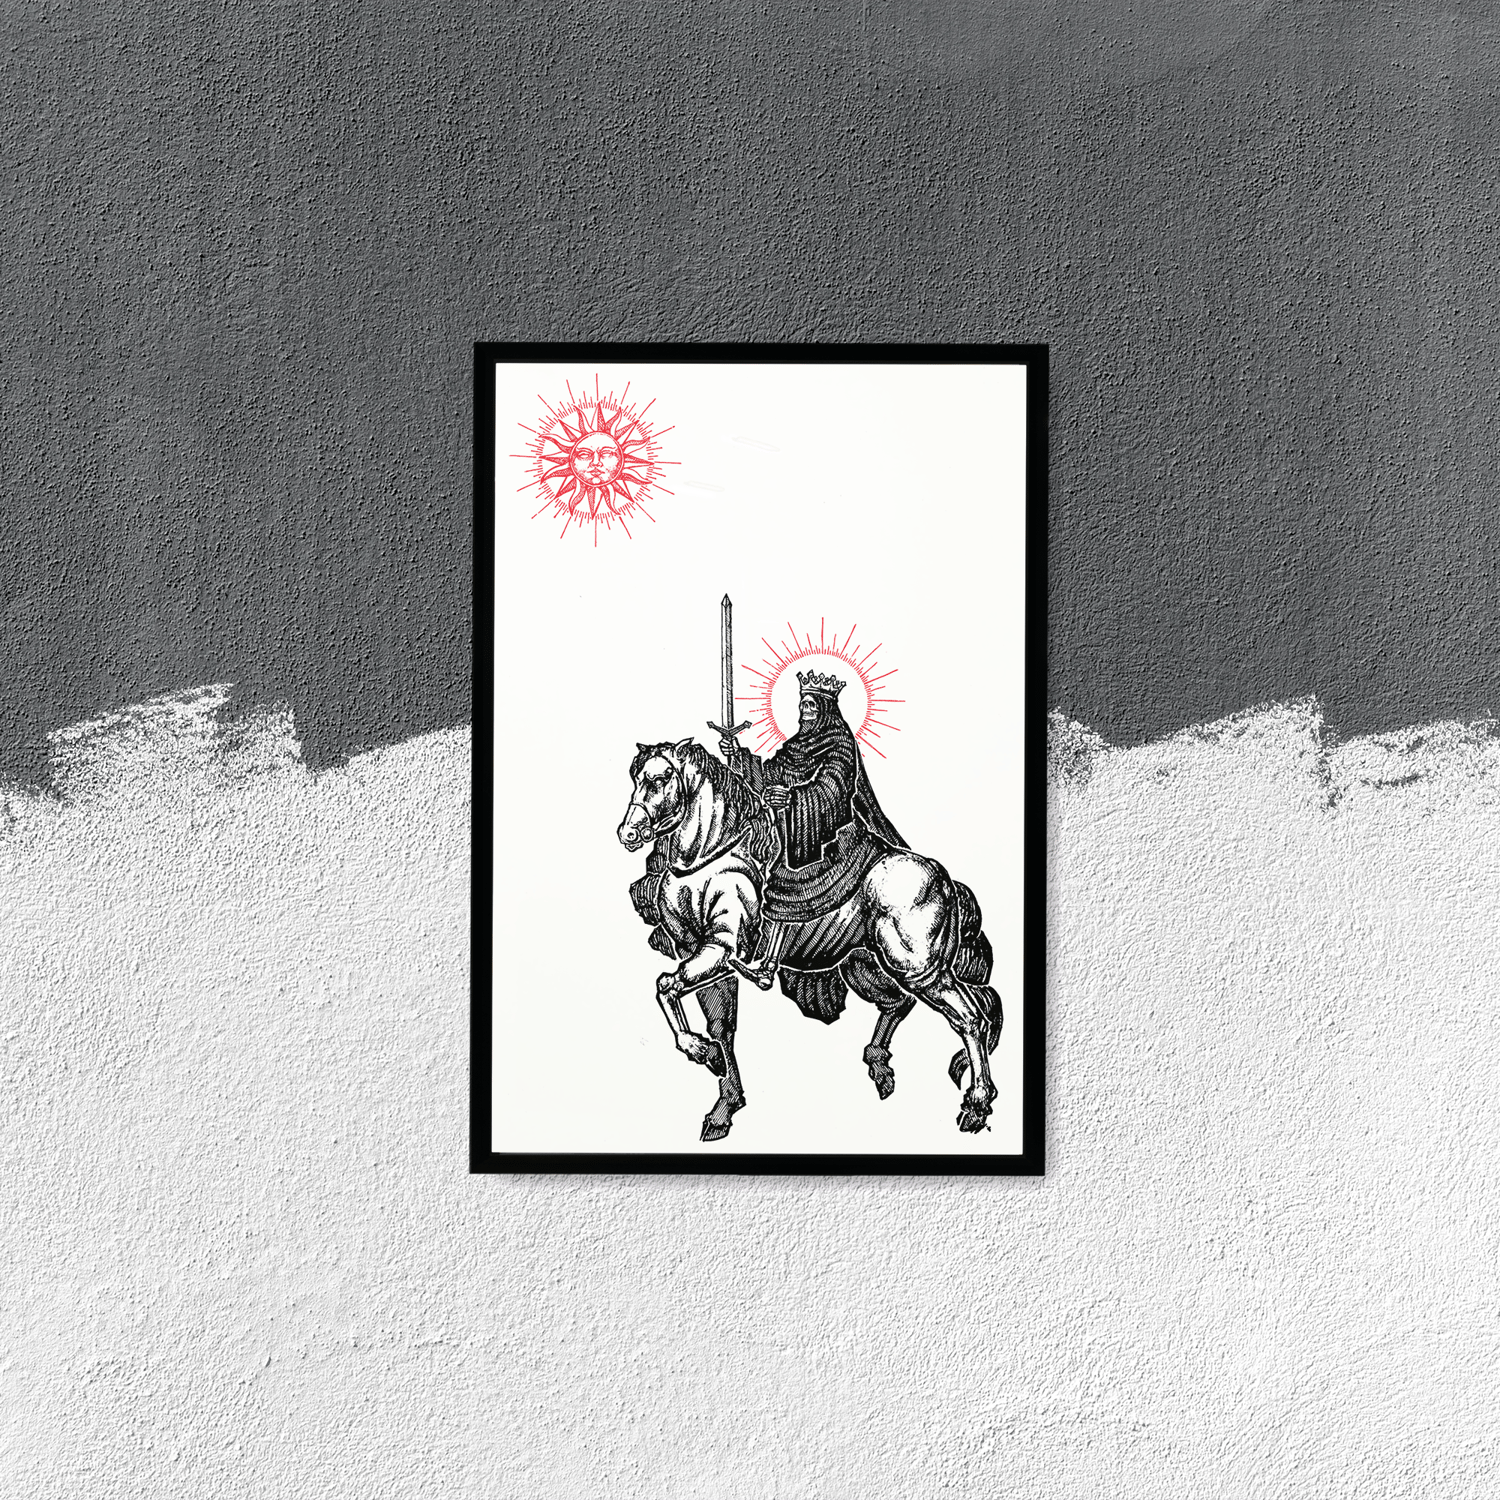 Image of "Knight of Swords” 13"x19" Art Print